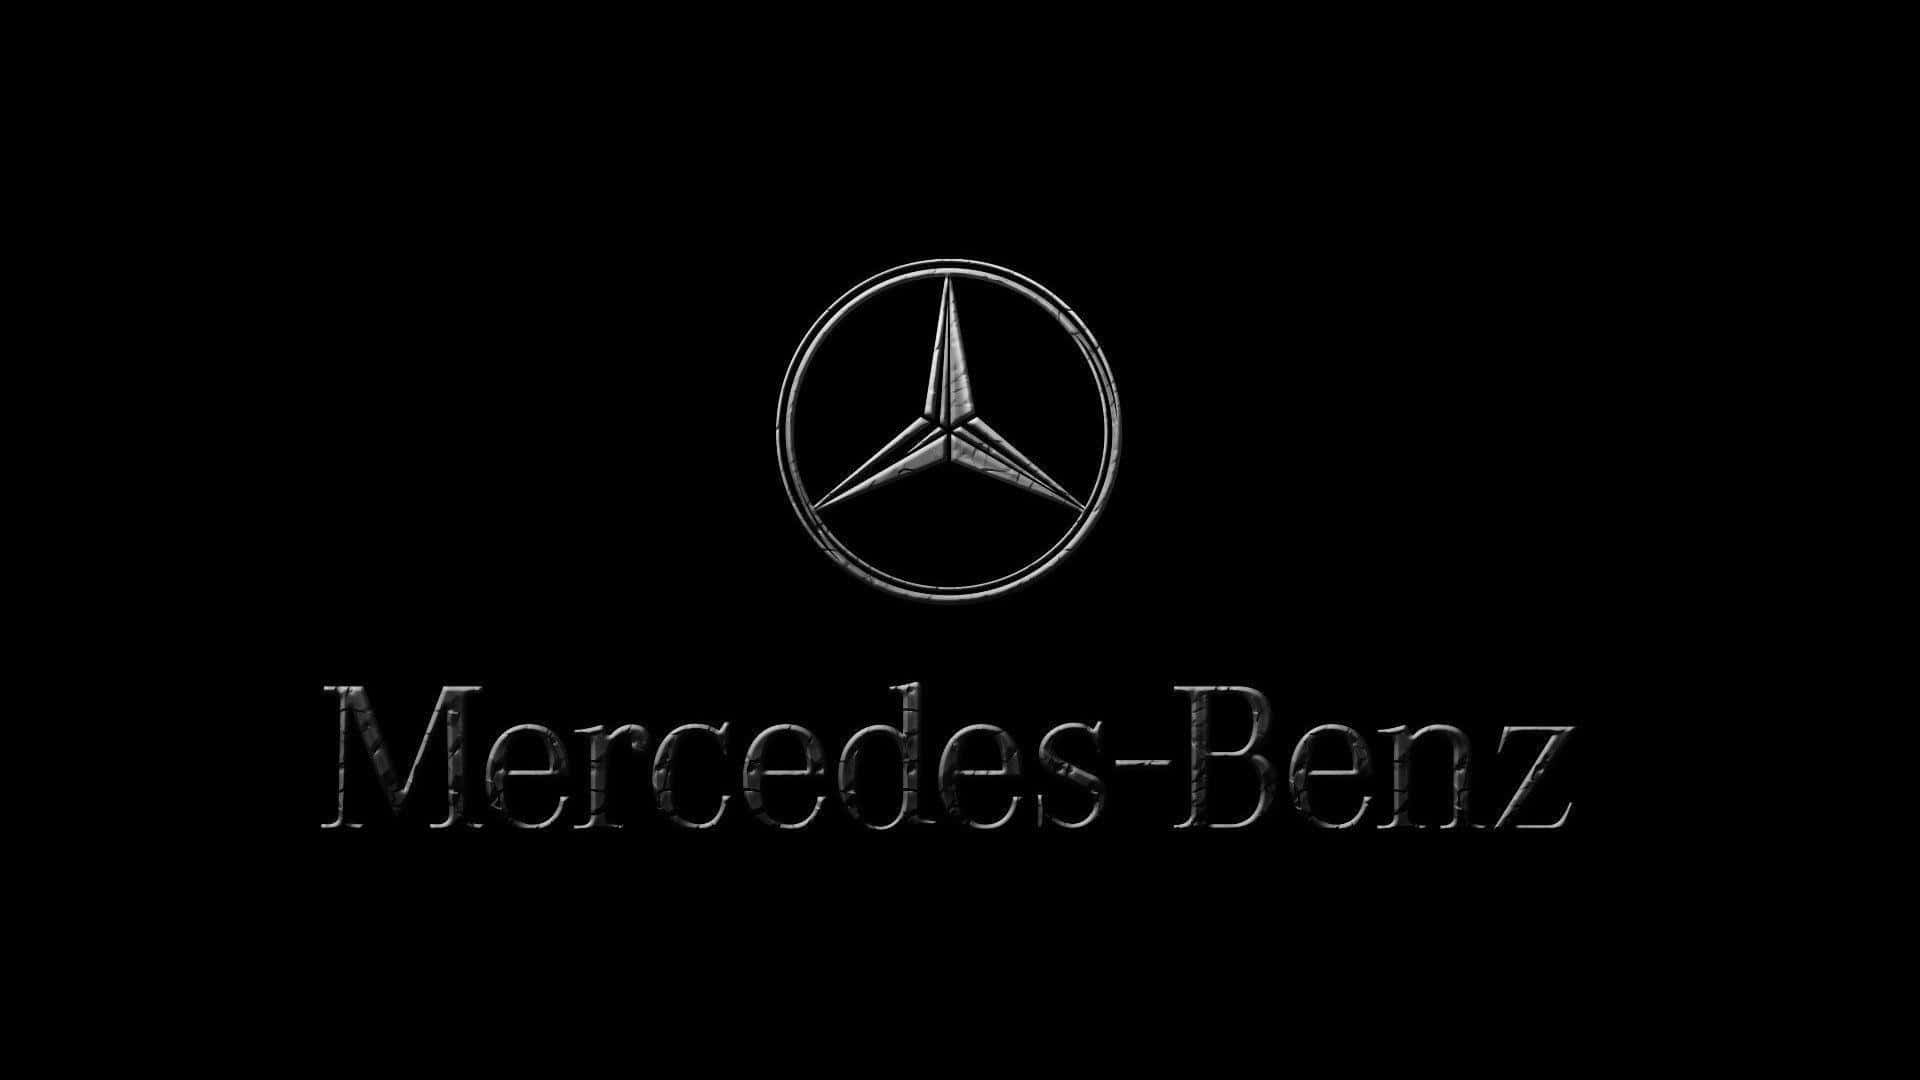 The Iconic Mercedes Benz Logo